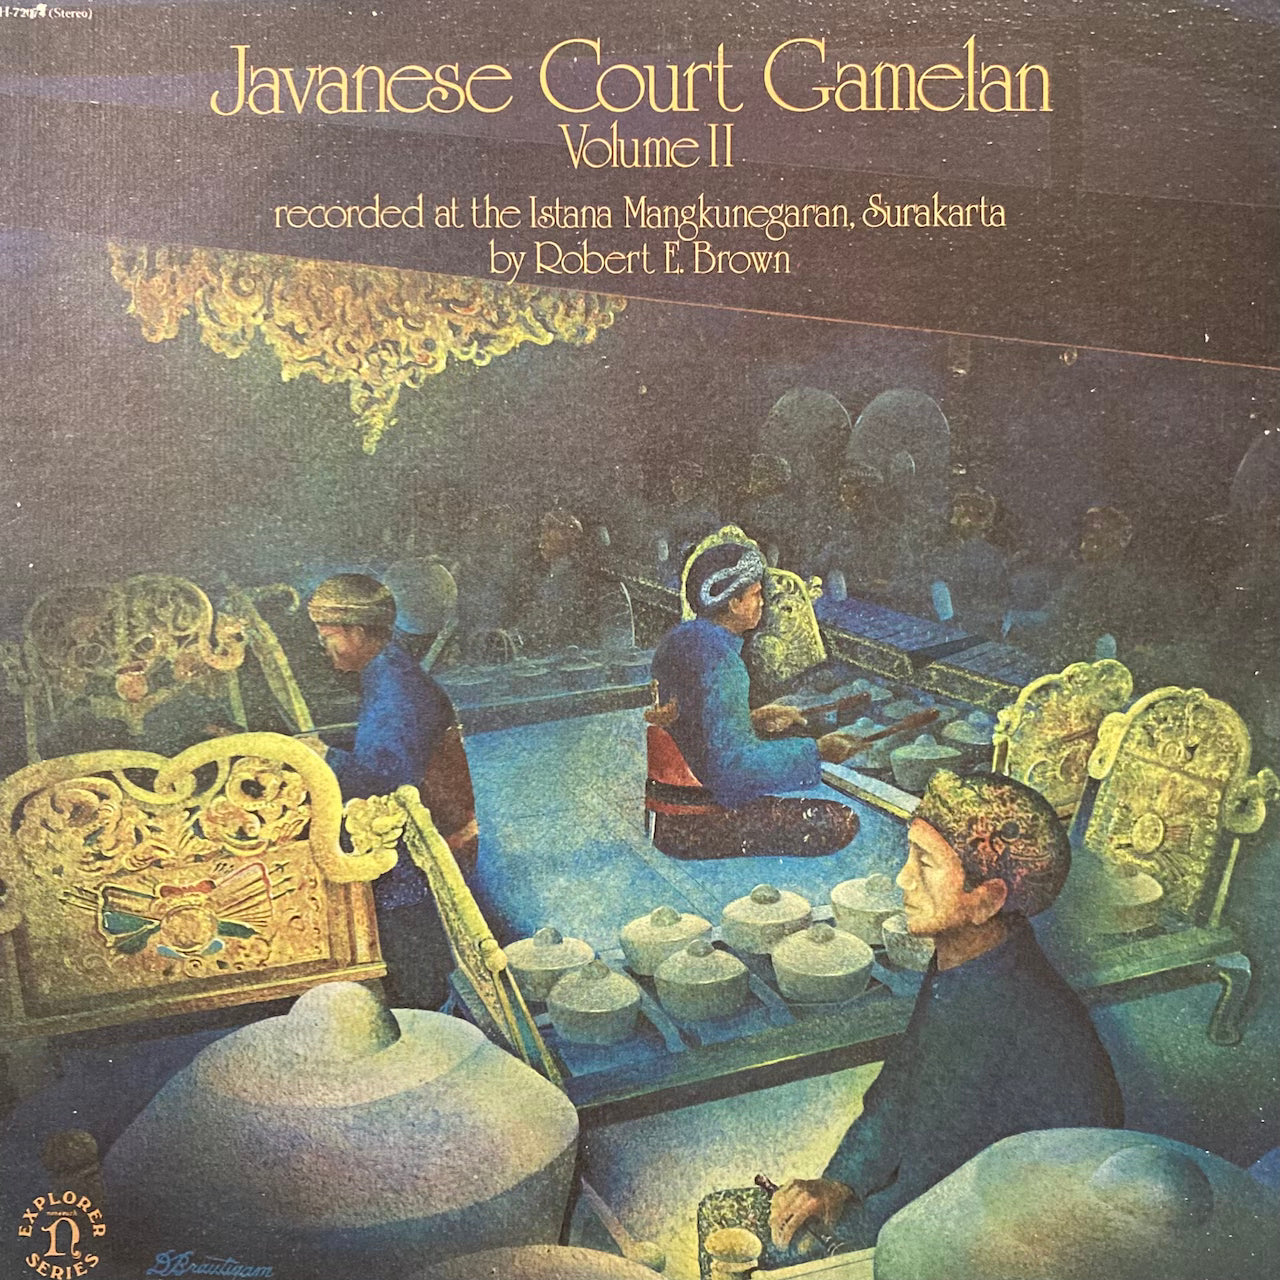 Robert E. Brown - Javanese Court Gamelan Volume II